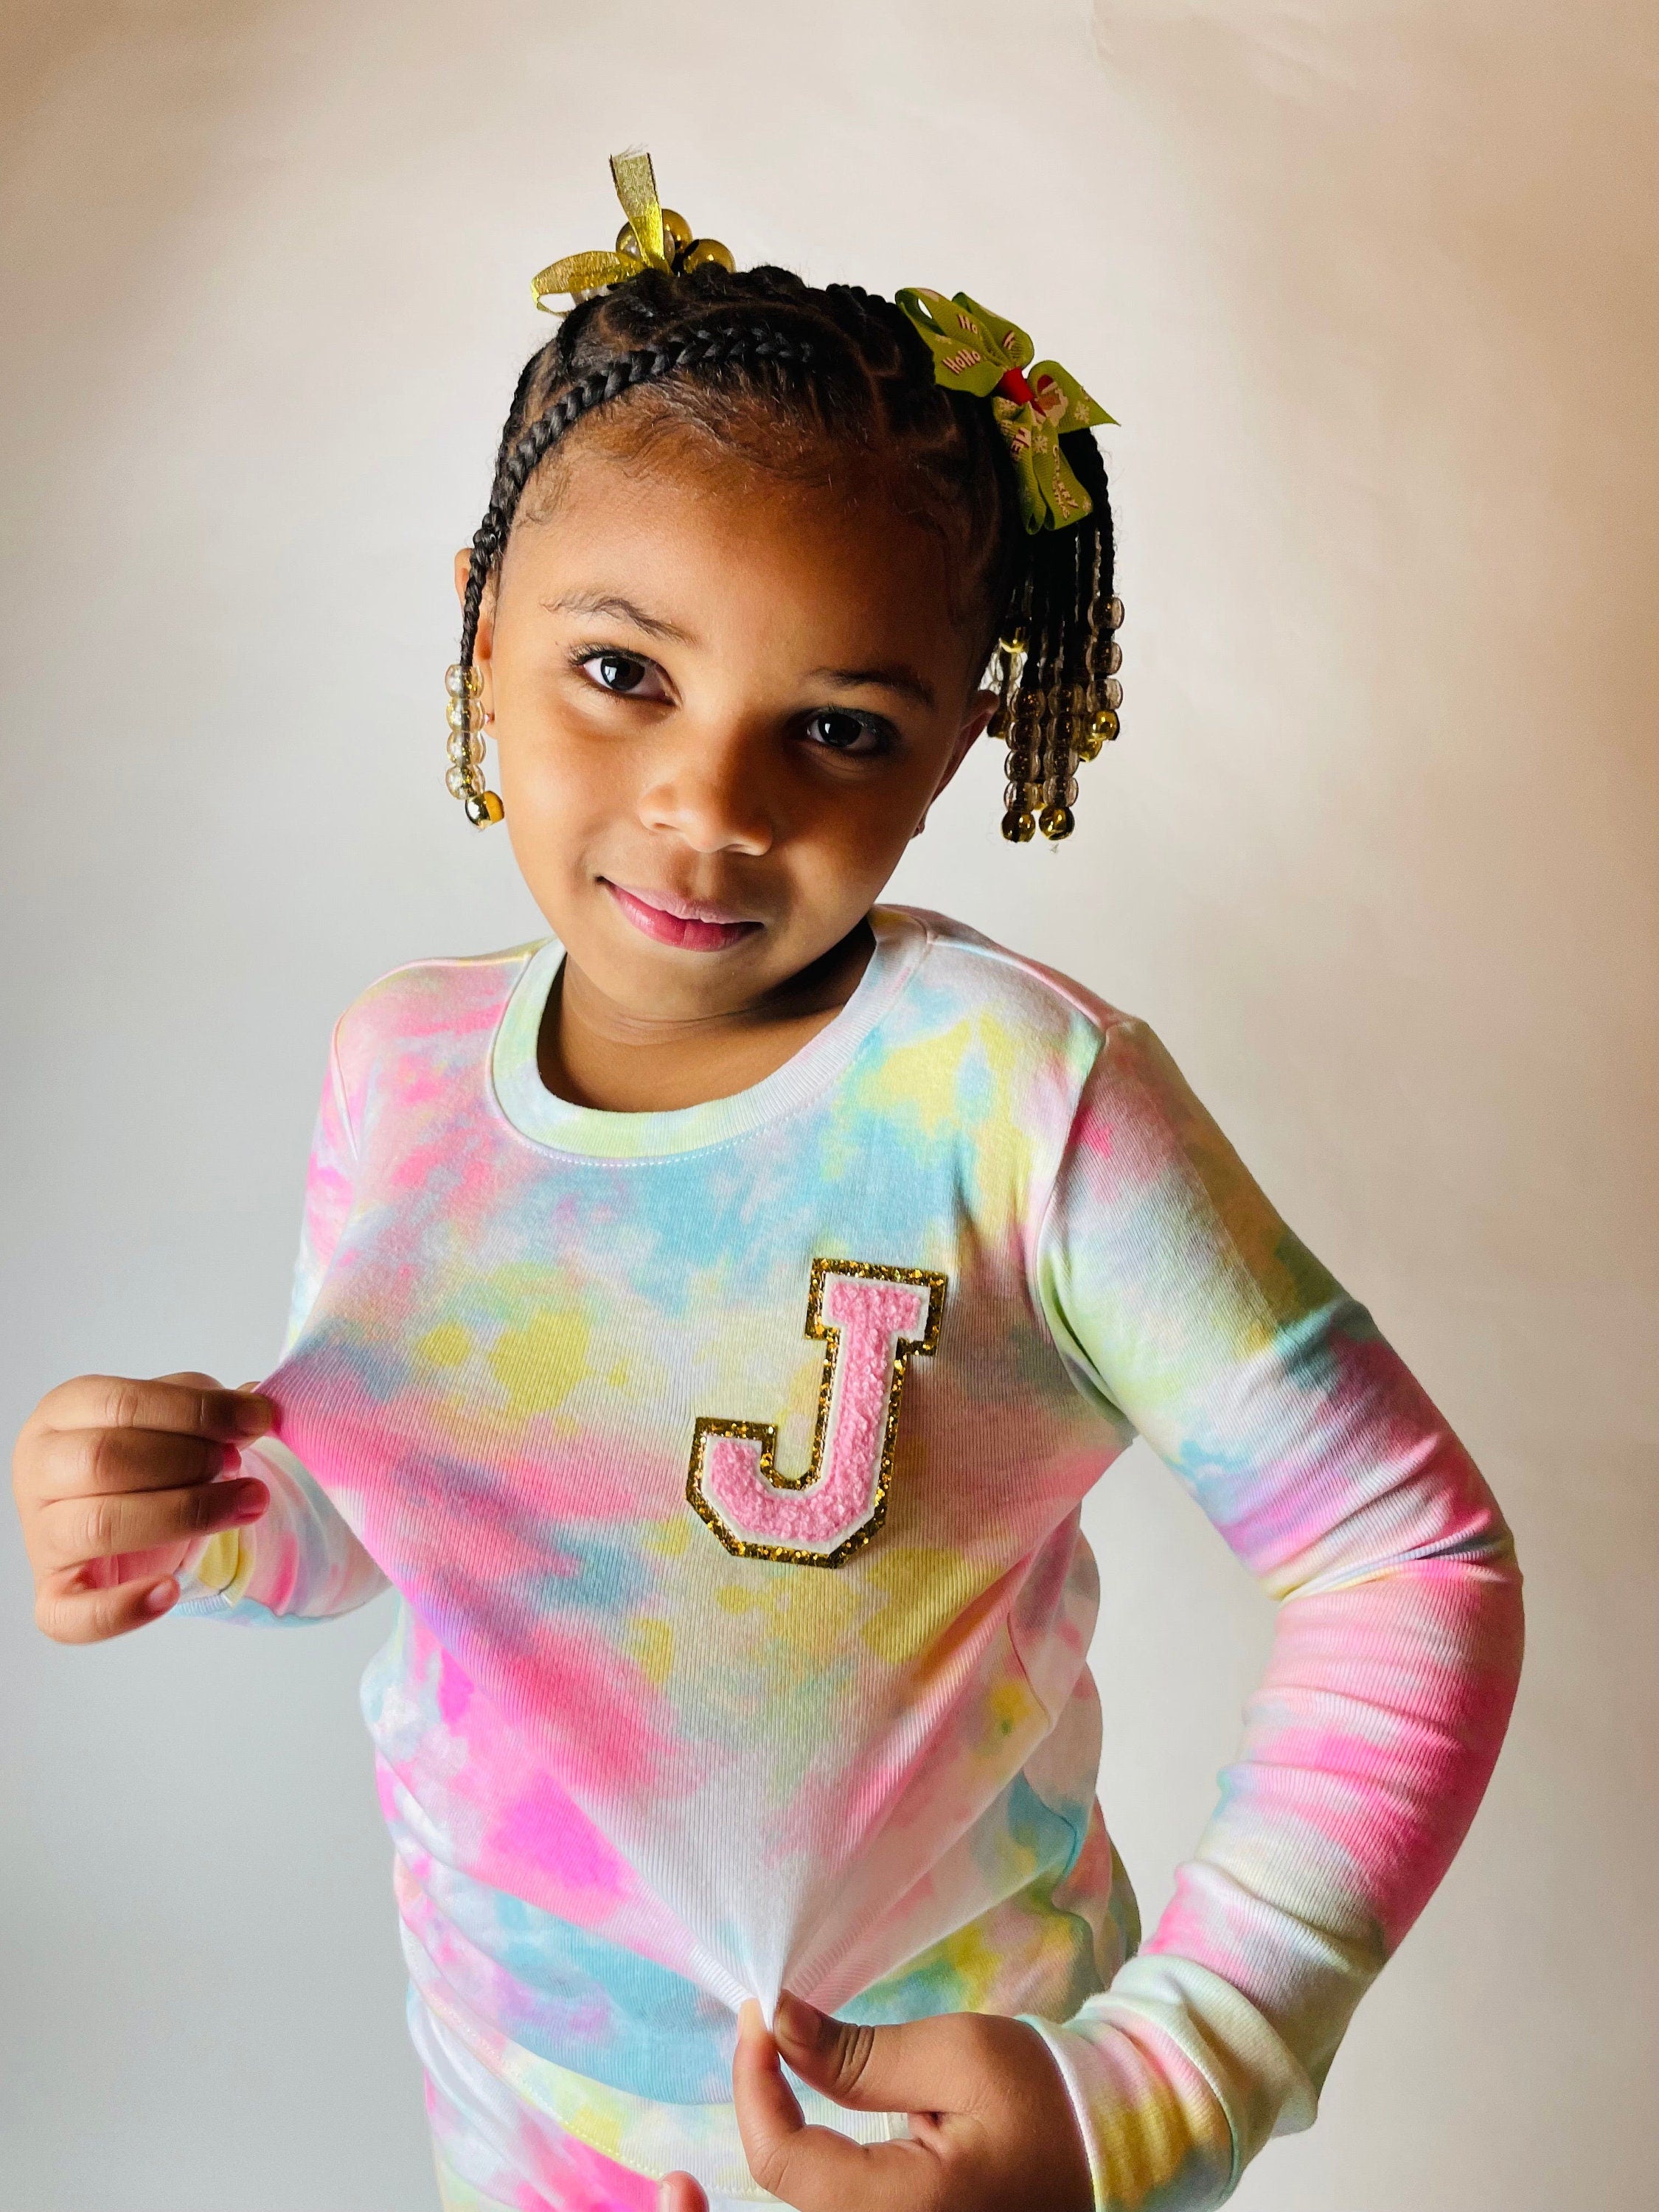 Kids Personalized Pajamas for Girls and Boys| Toddler Pajamas| Youth Pajamas| Birthday Gift| Slumber Party| Pink| Yellow| Christmas Gift